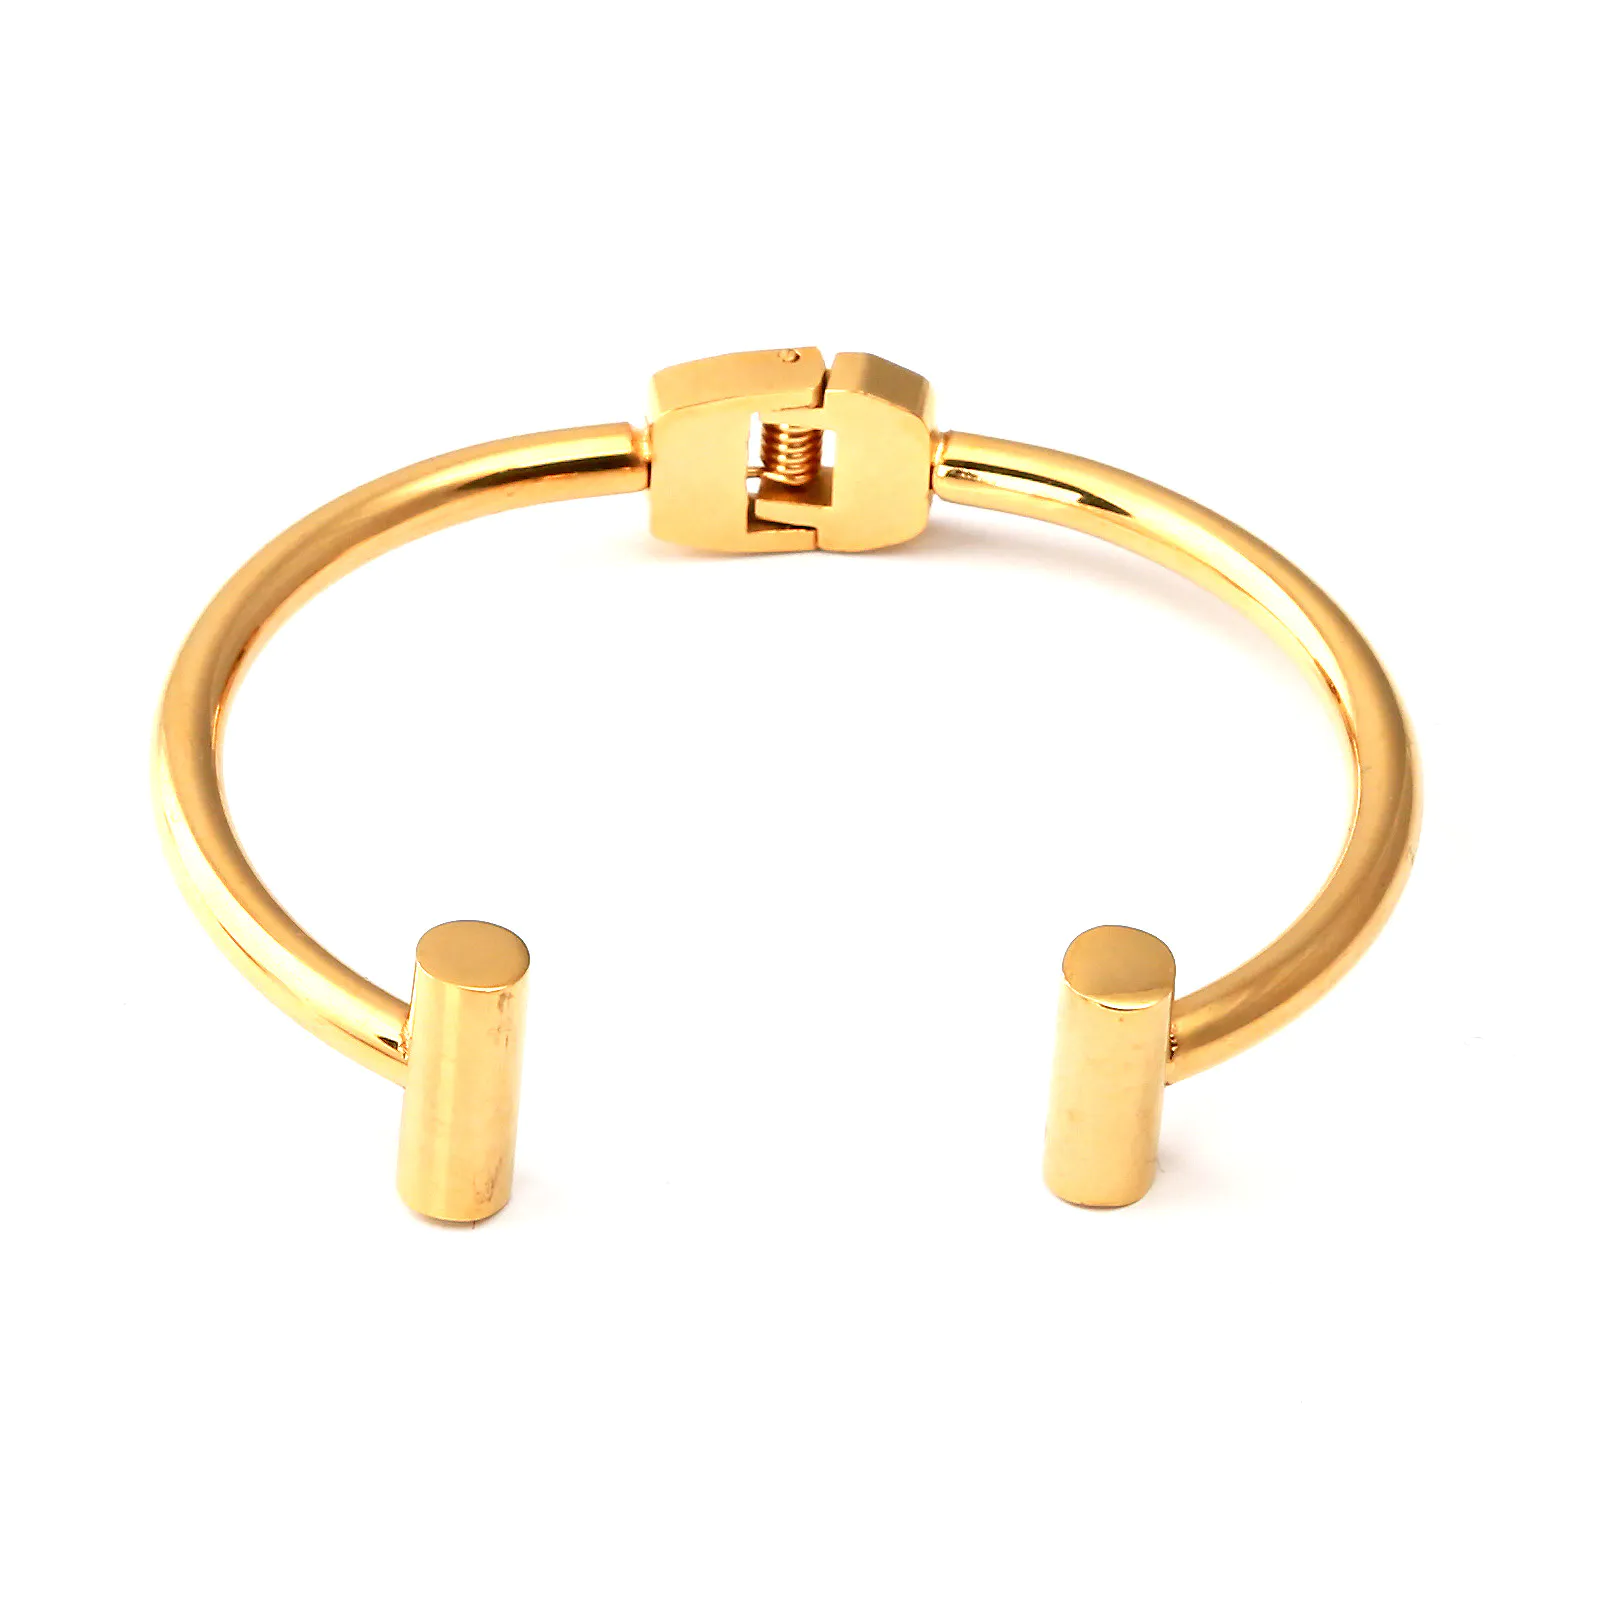 Custom unsealed semi-circular curved women's bangle bracelet